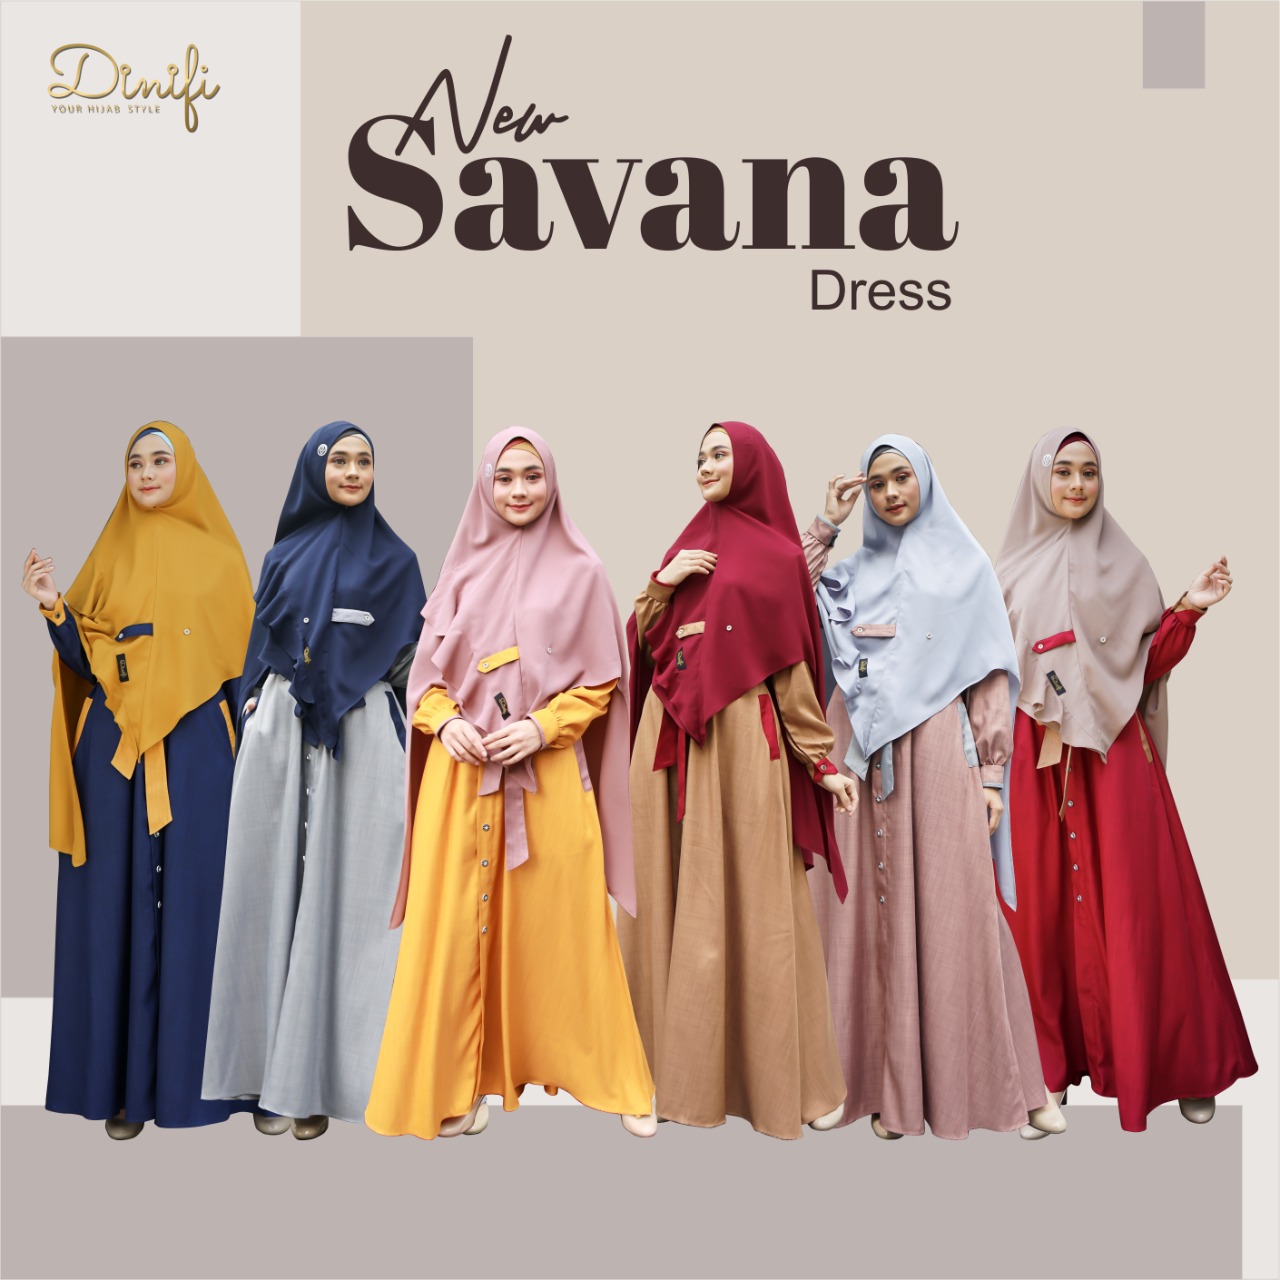 New Savana Dress